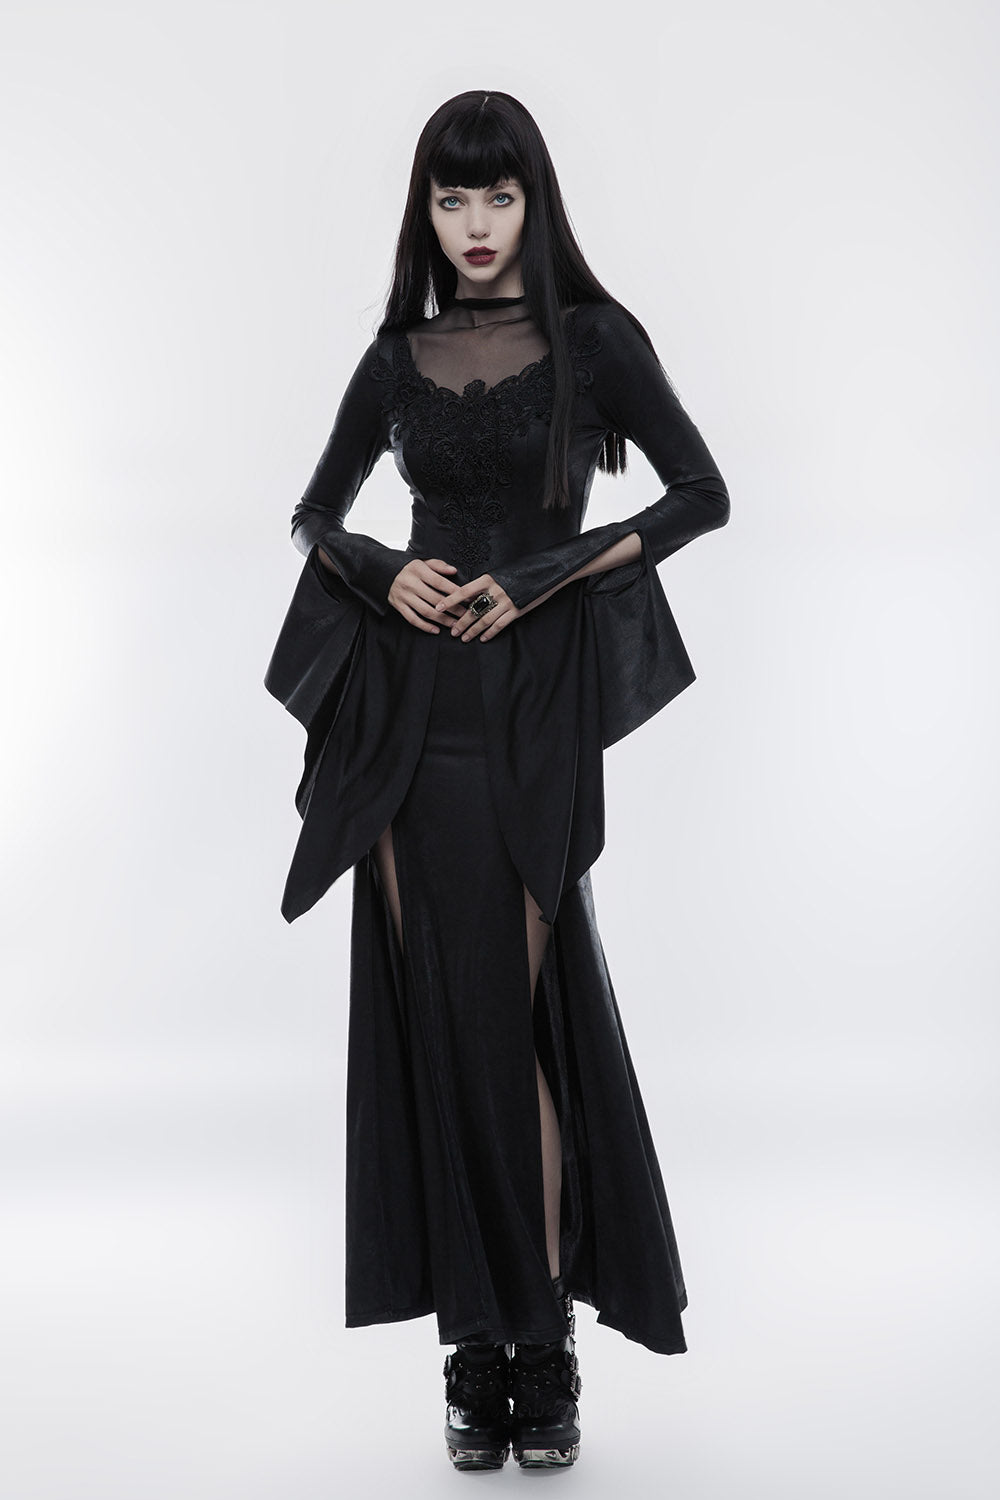 black gothic dress with thigh leg slits